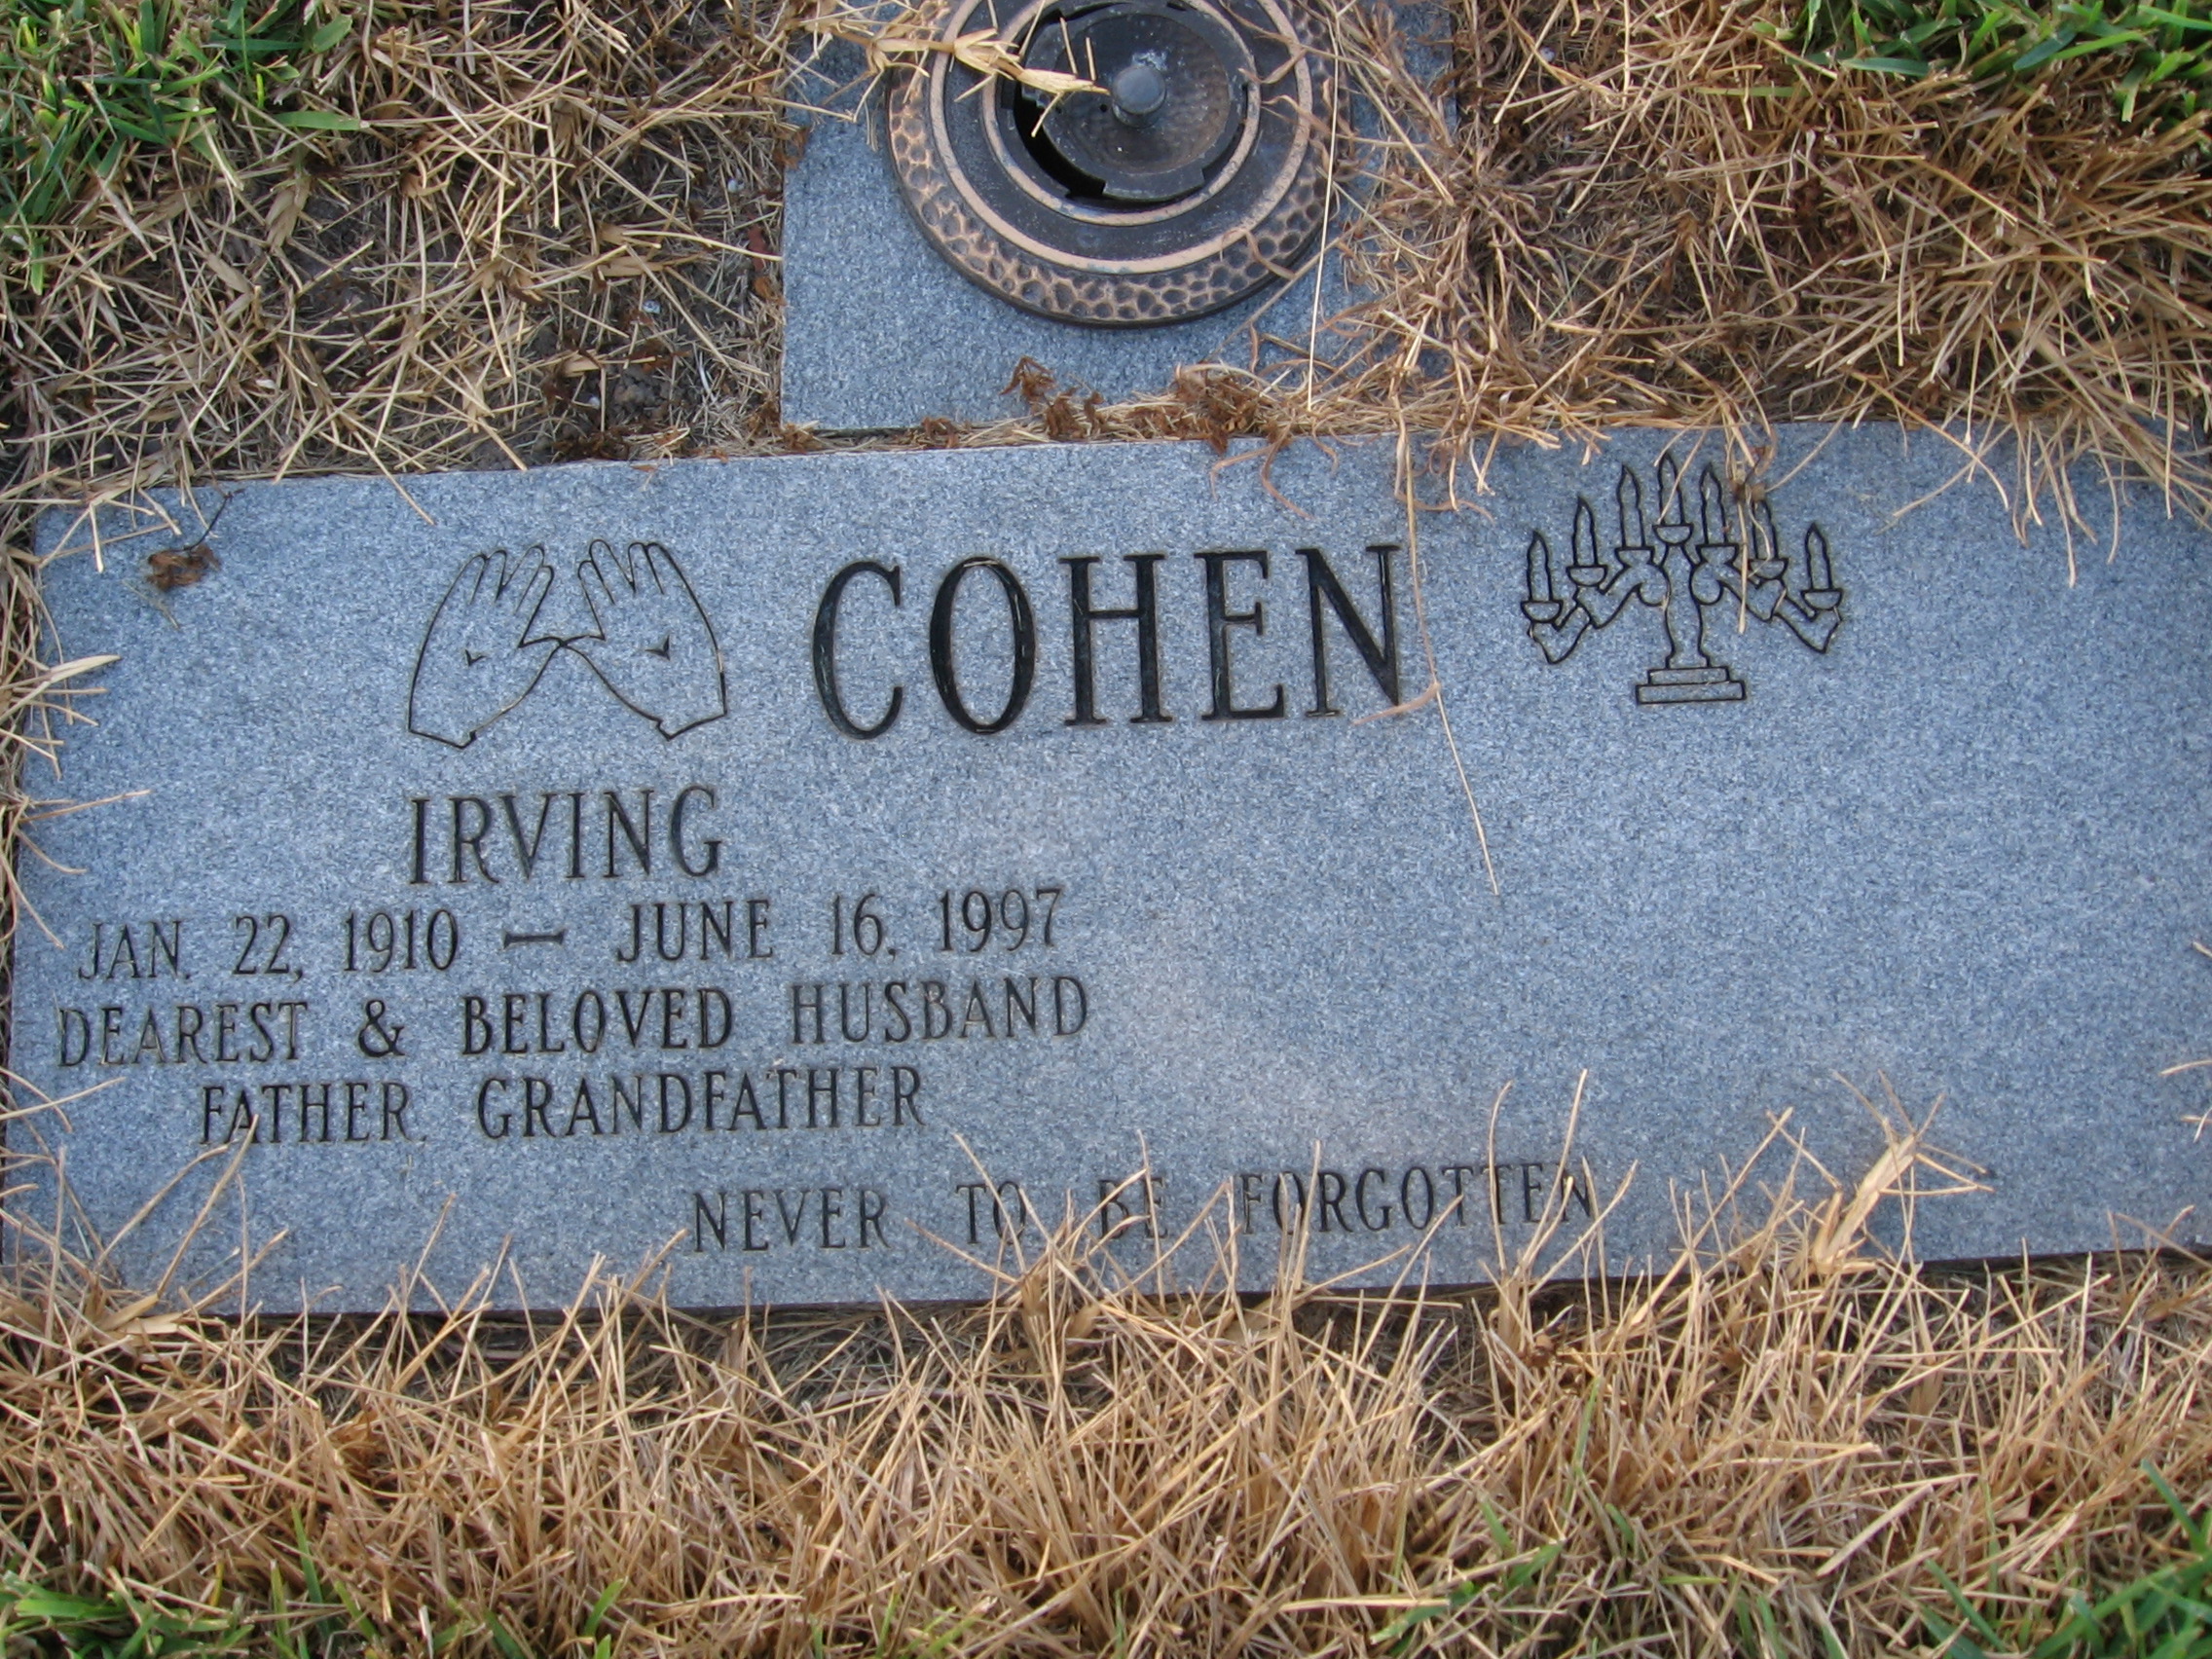 Irving Cohen